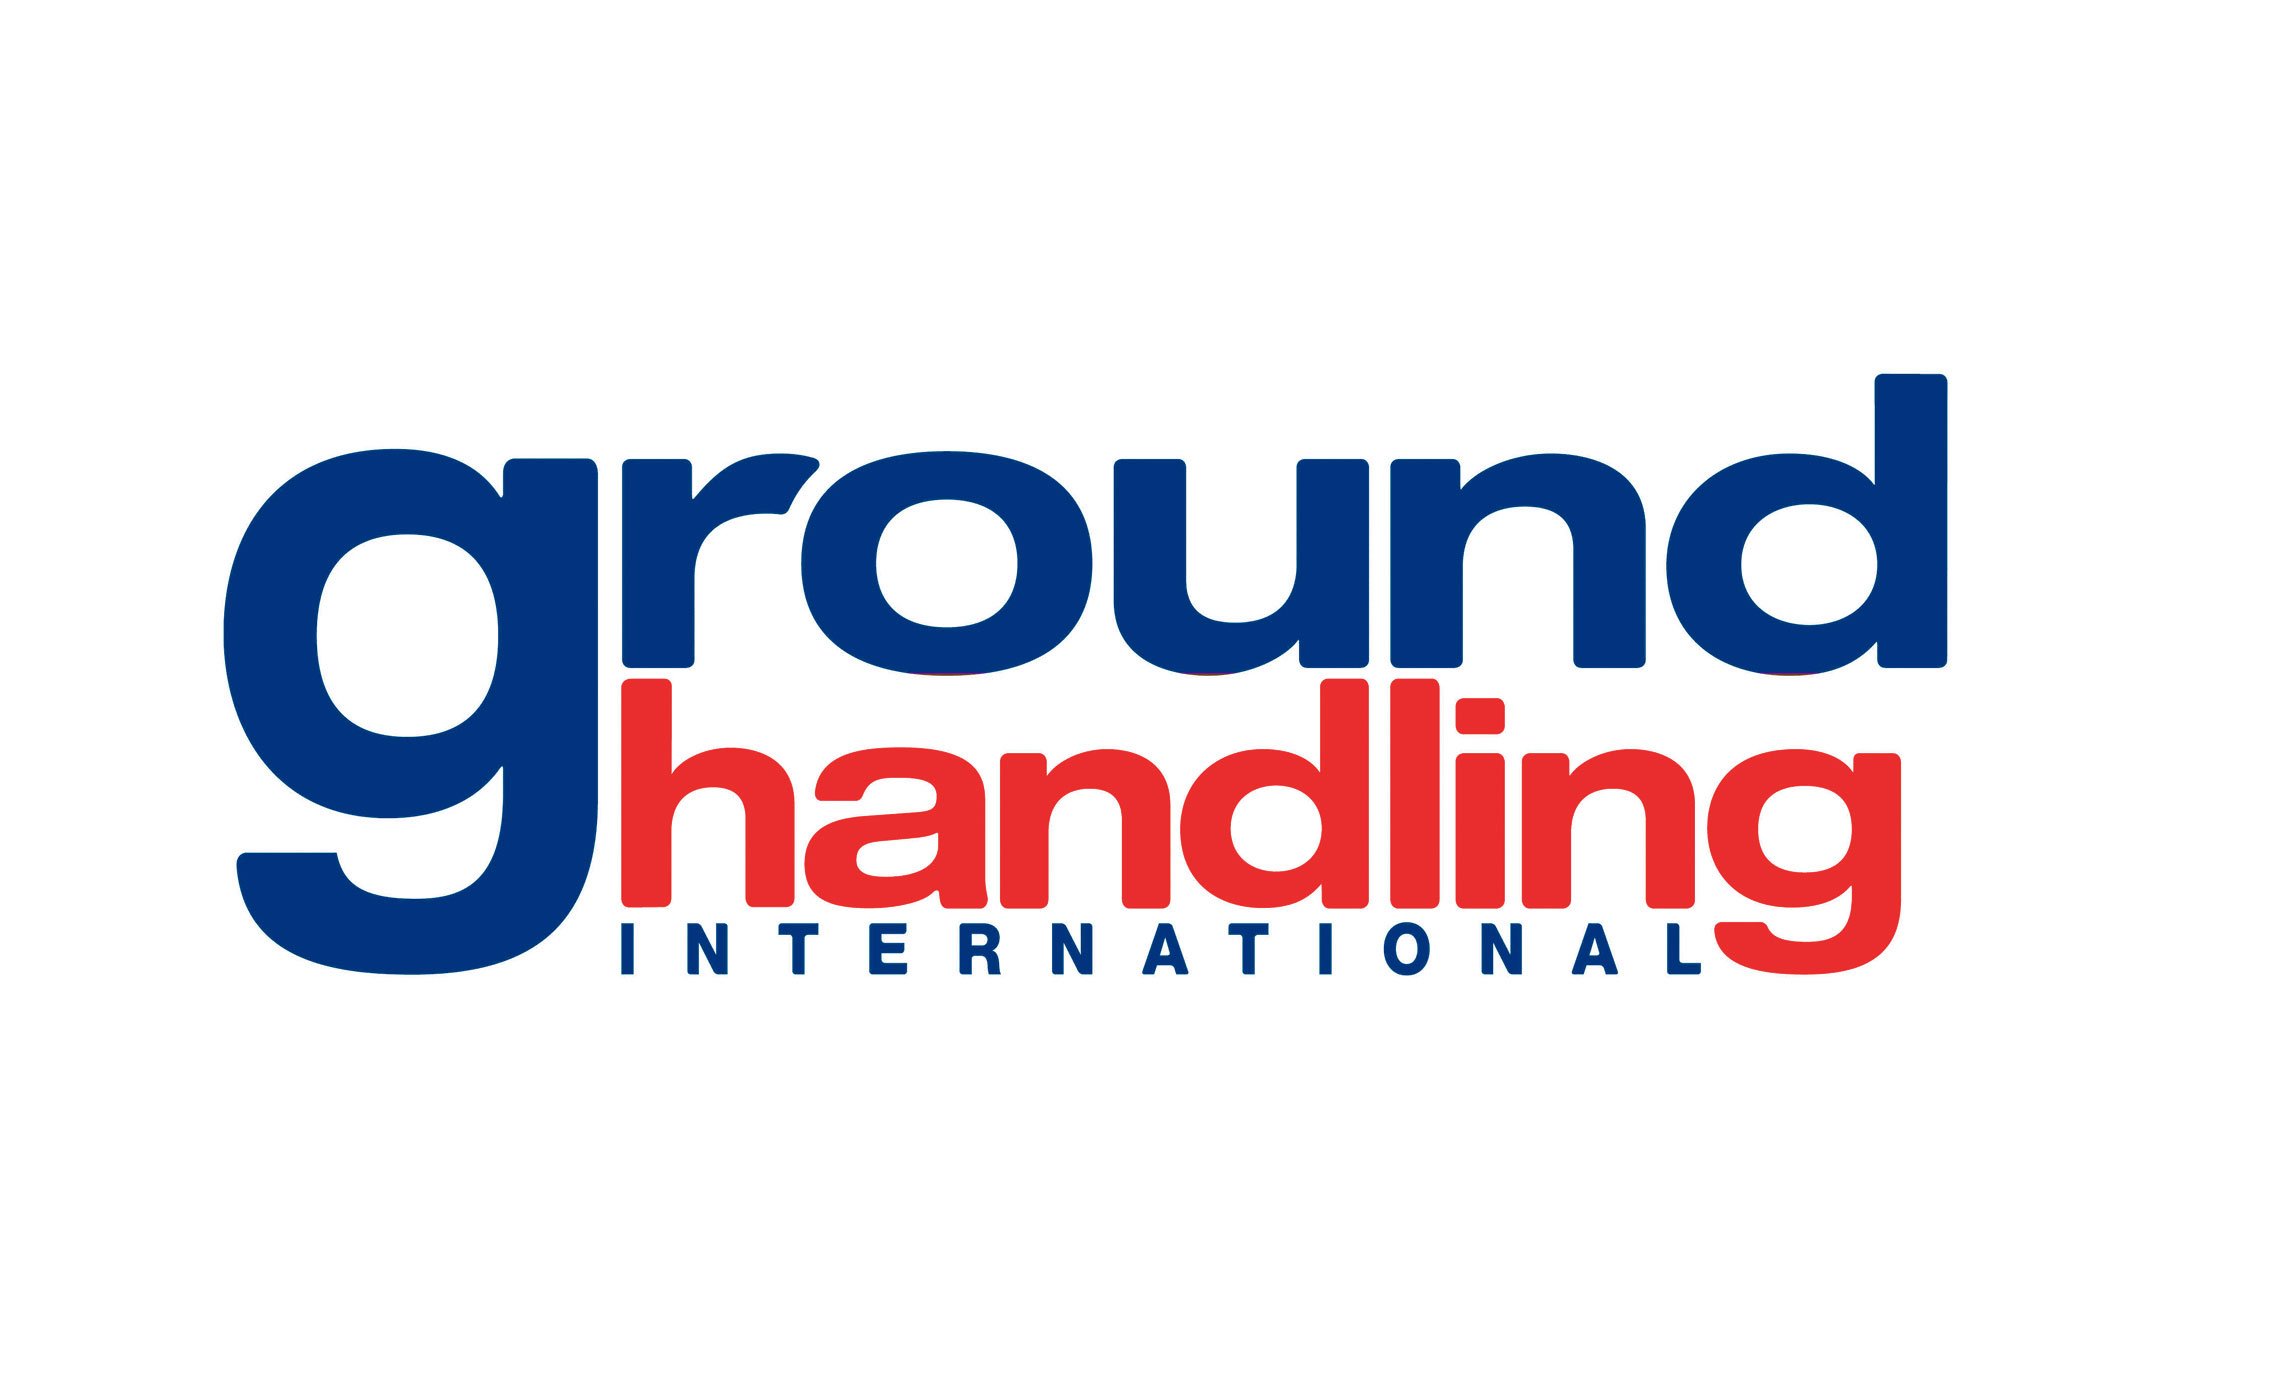 ground handling